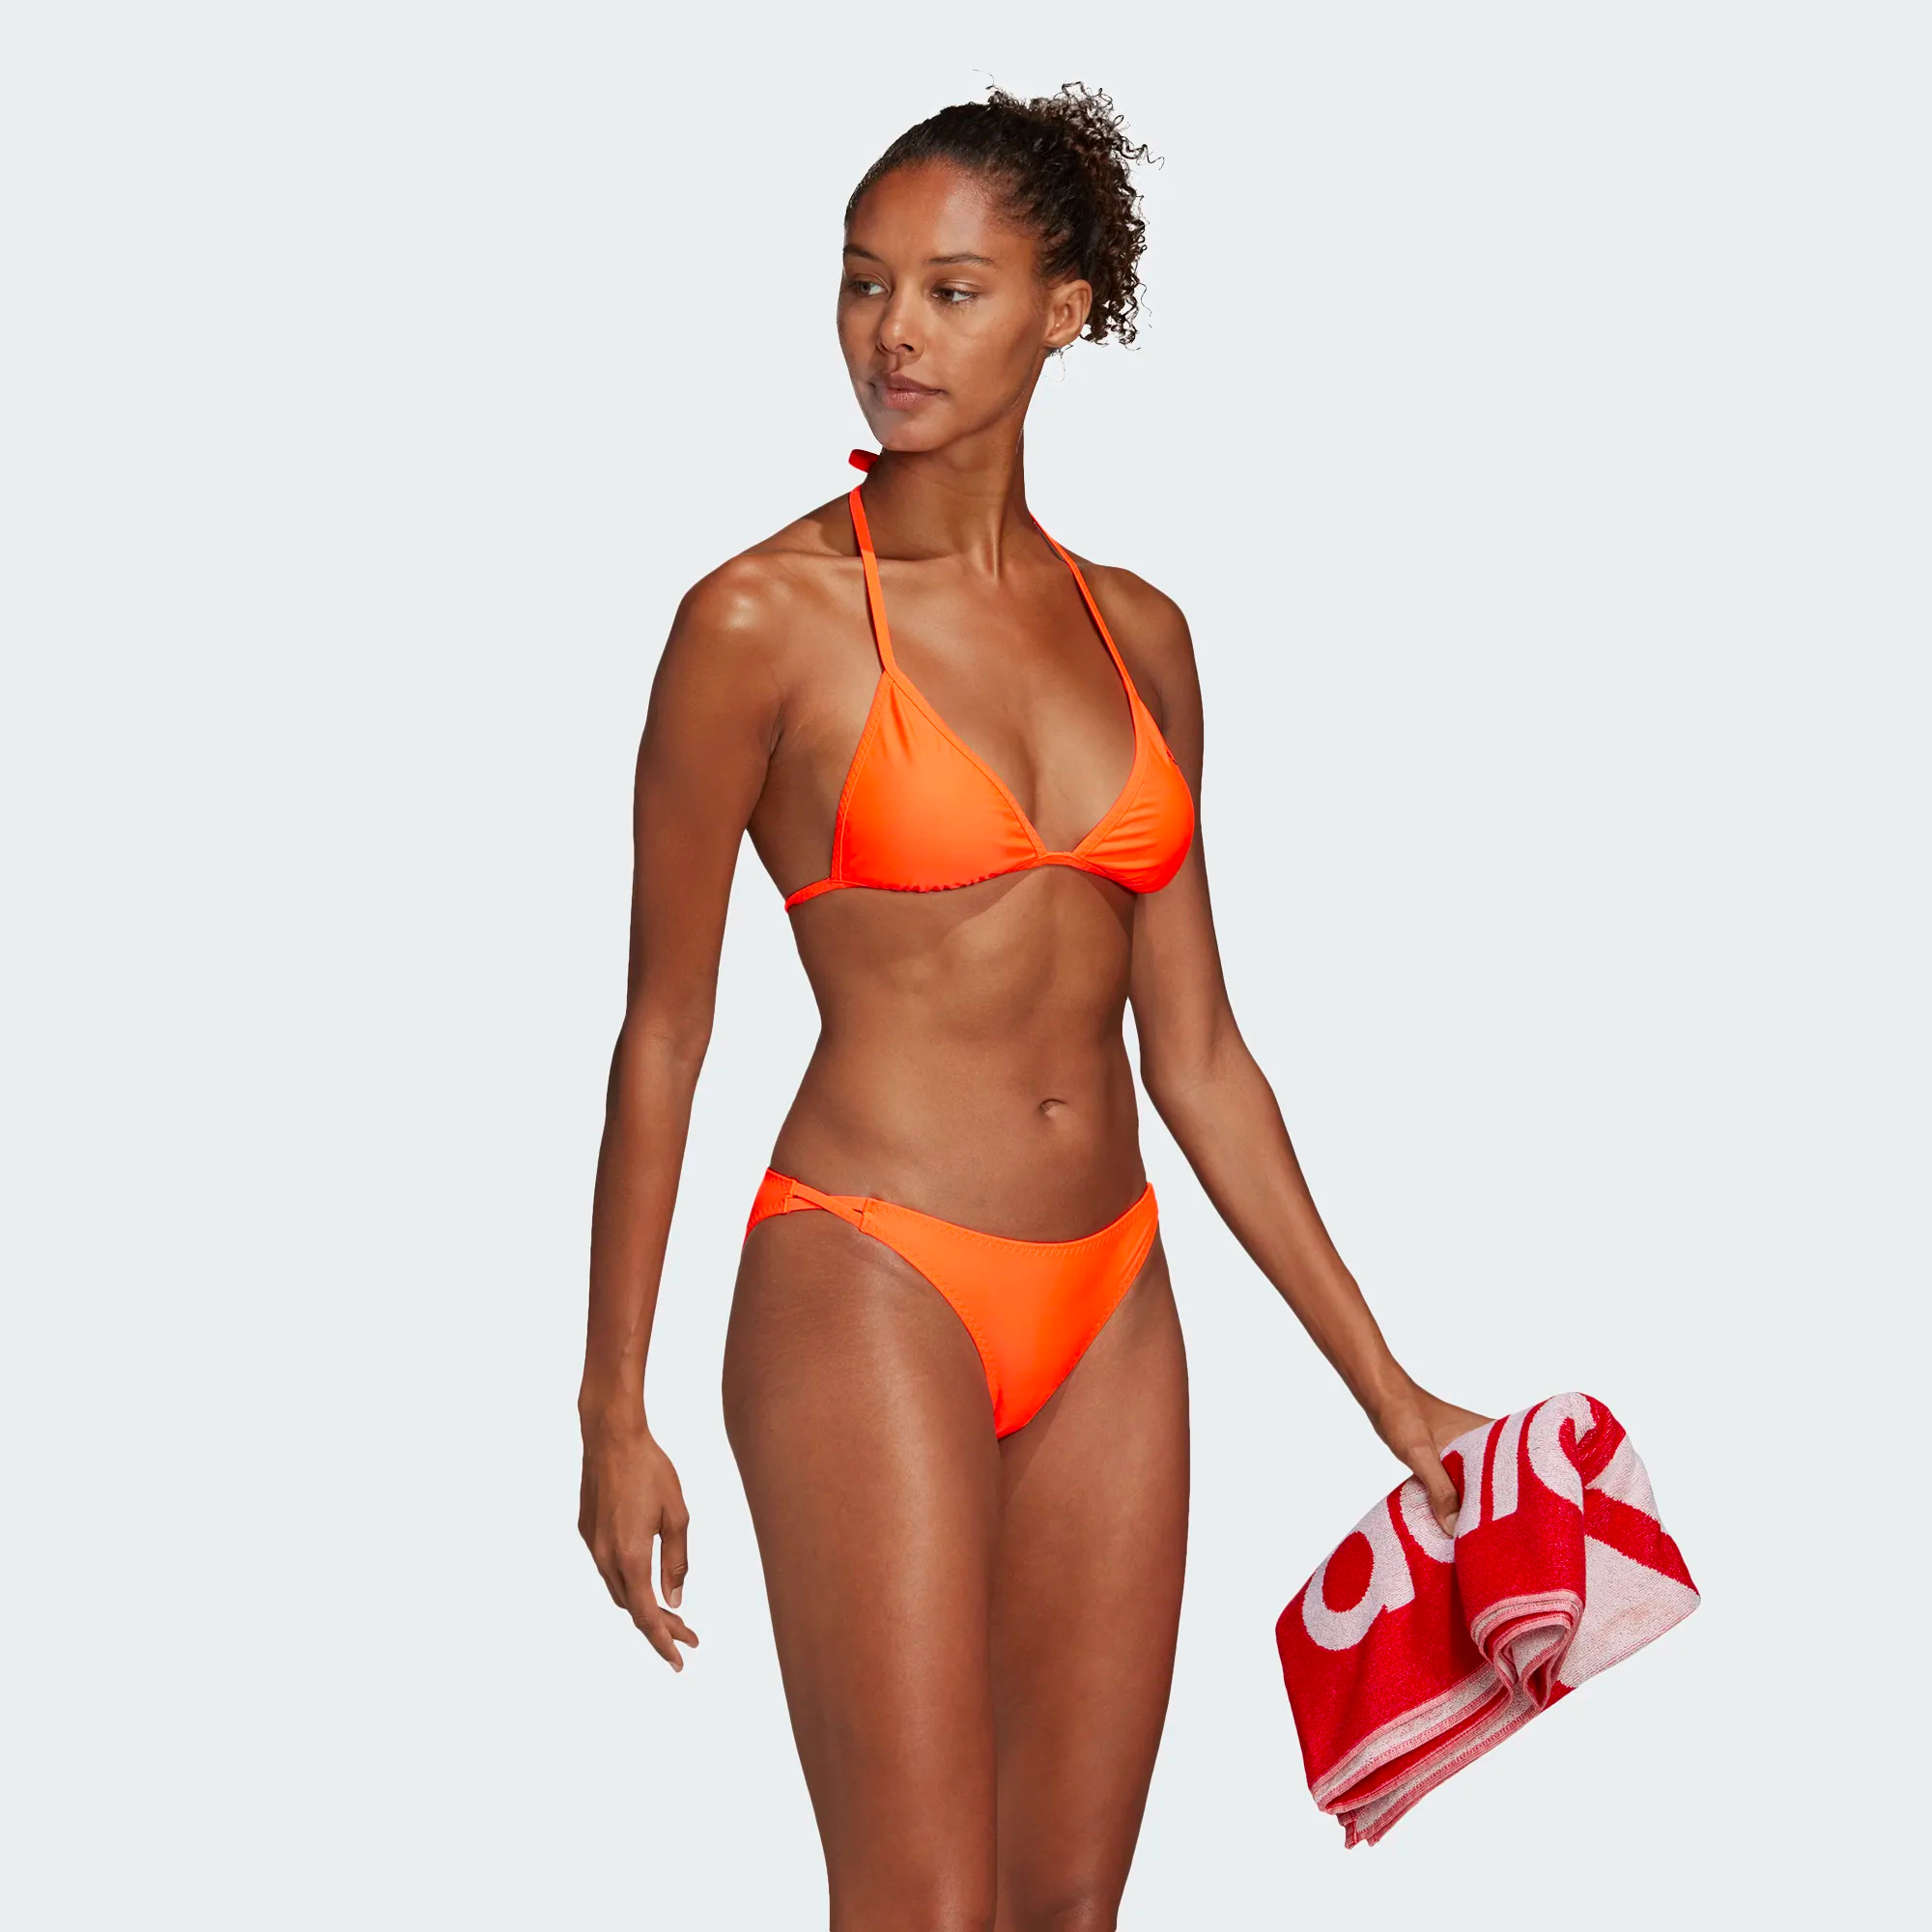 Adidas Beach Triangle Bikini - orange